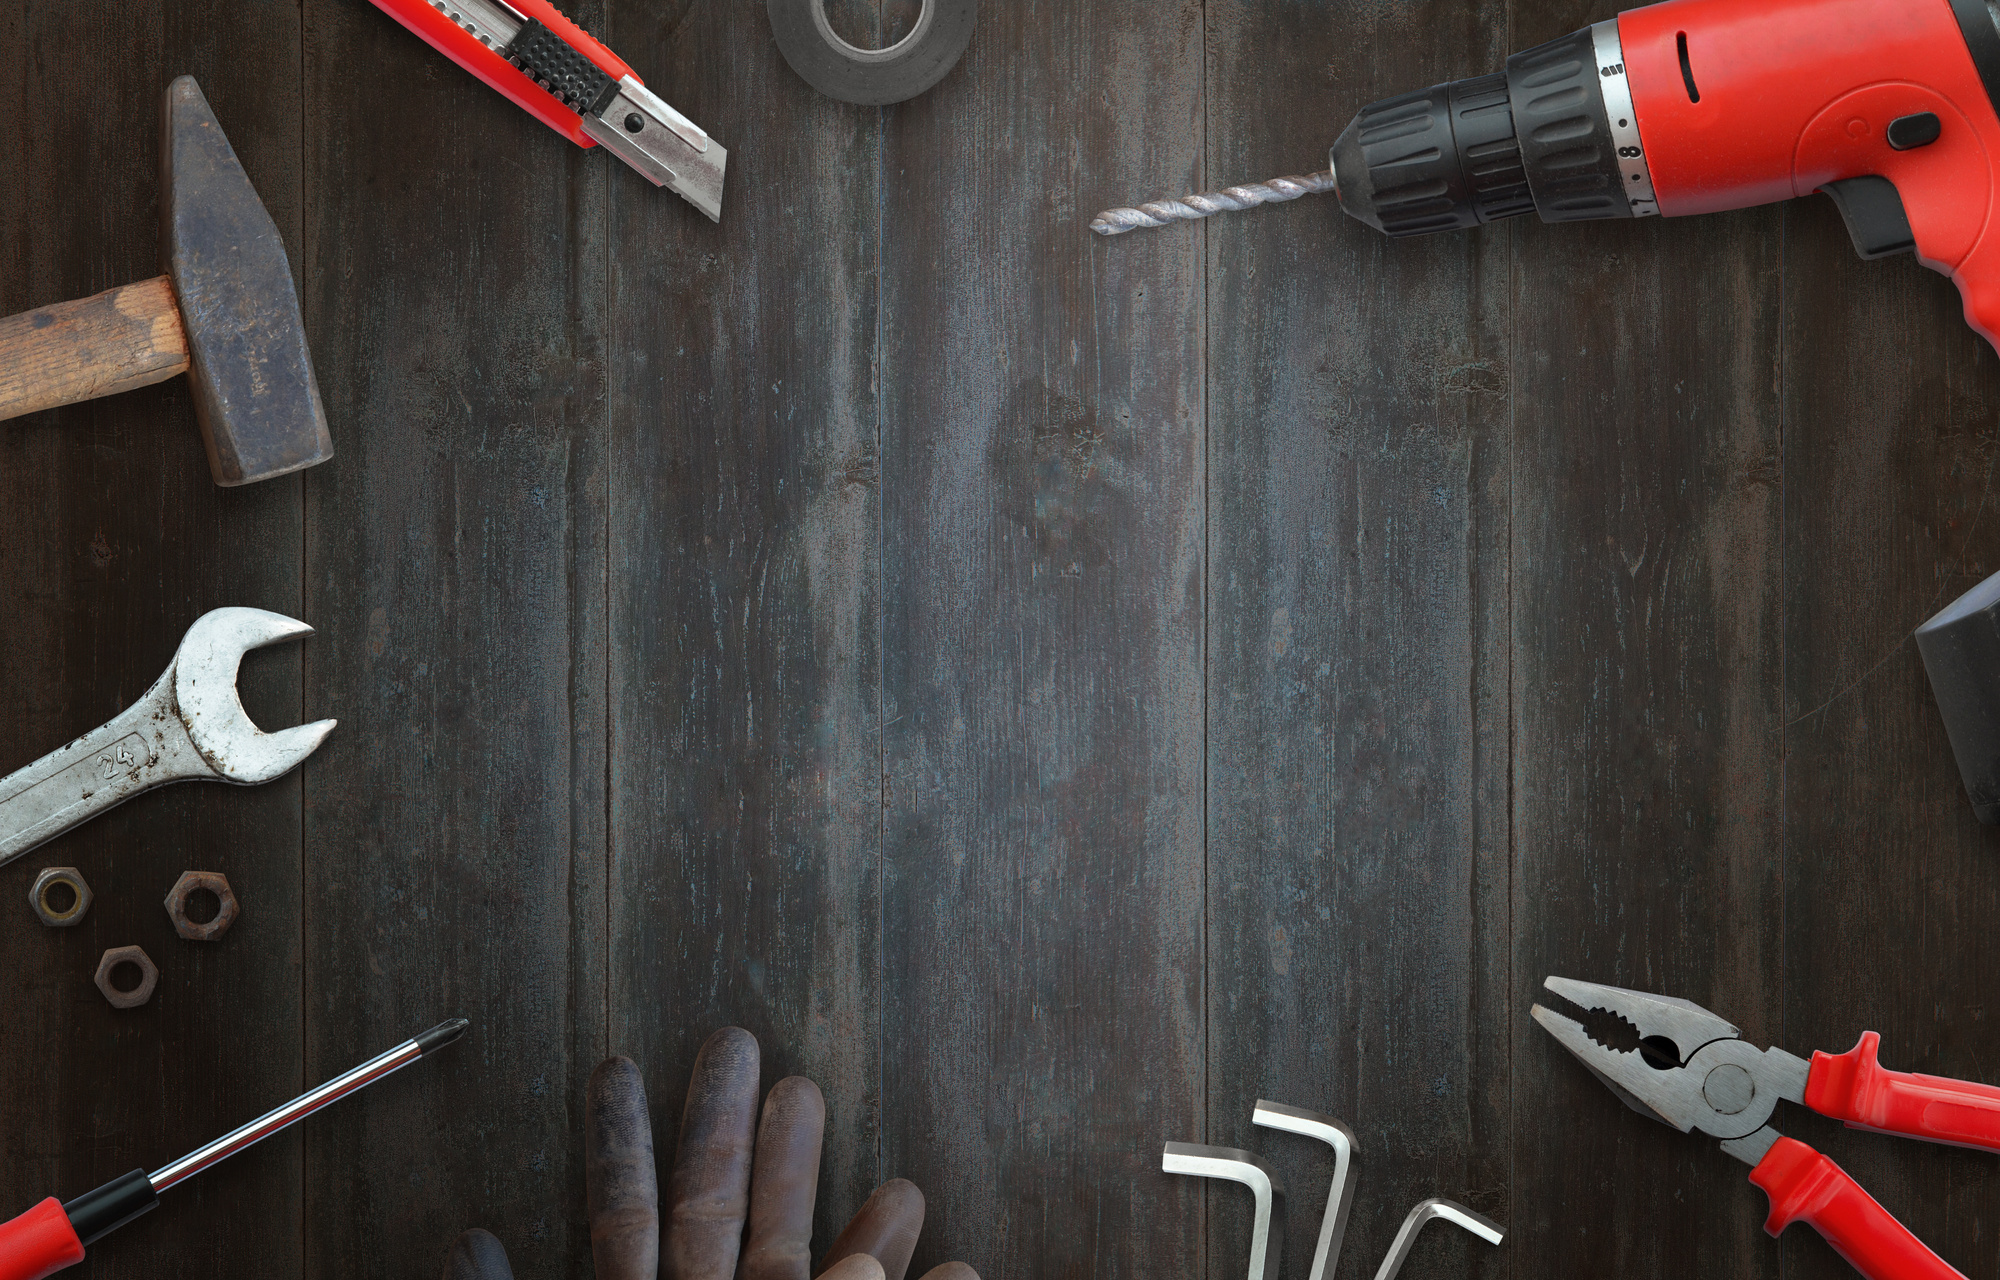 Handyman tools for home repairs.